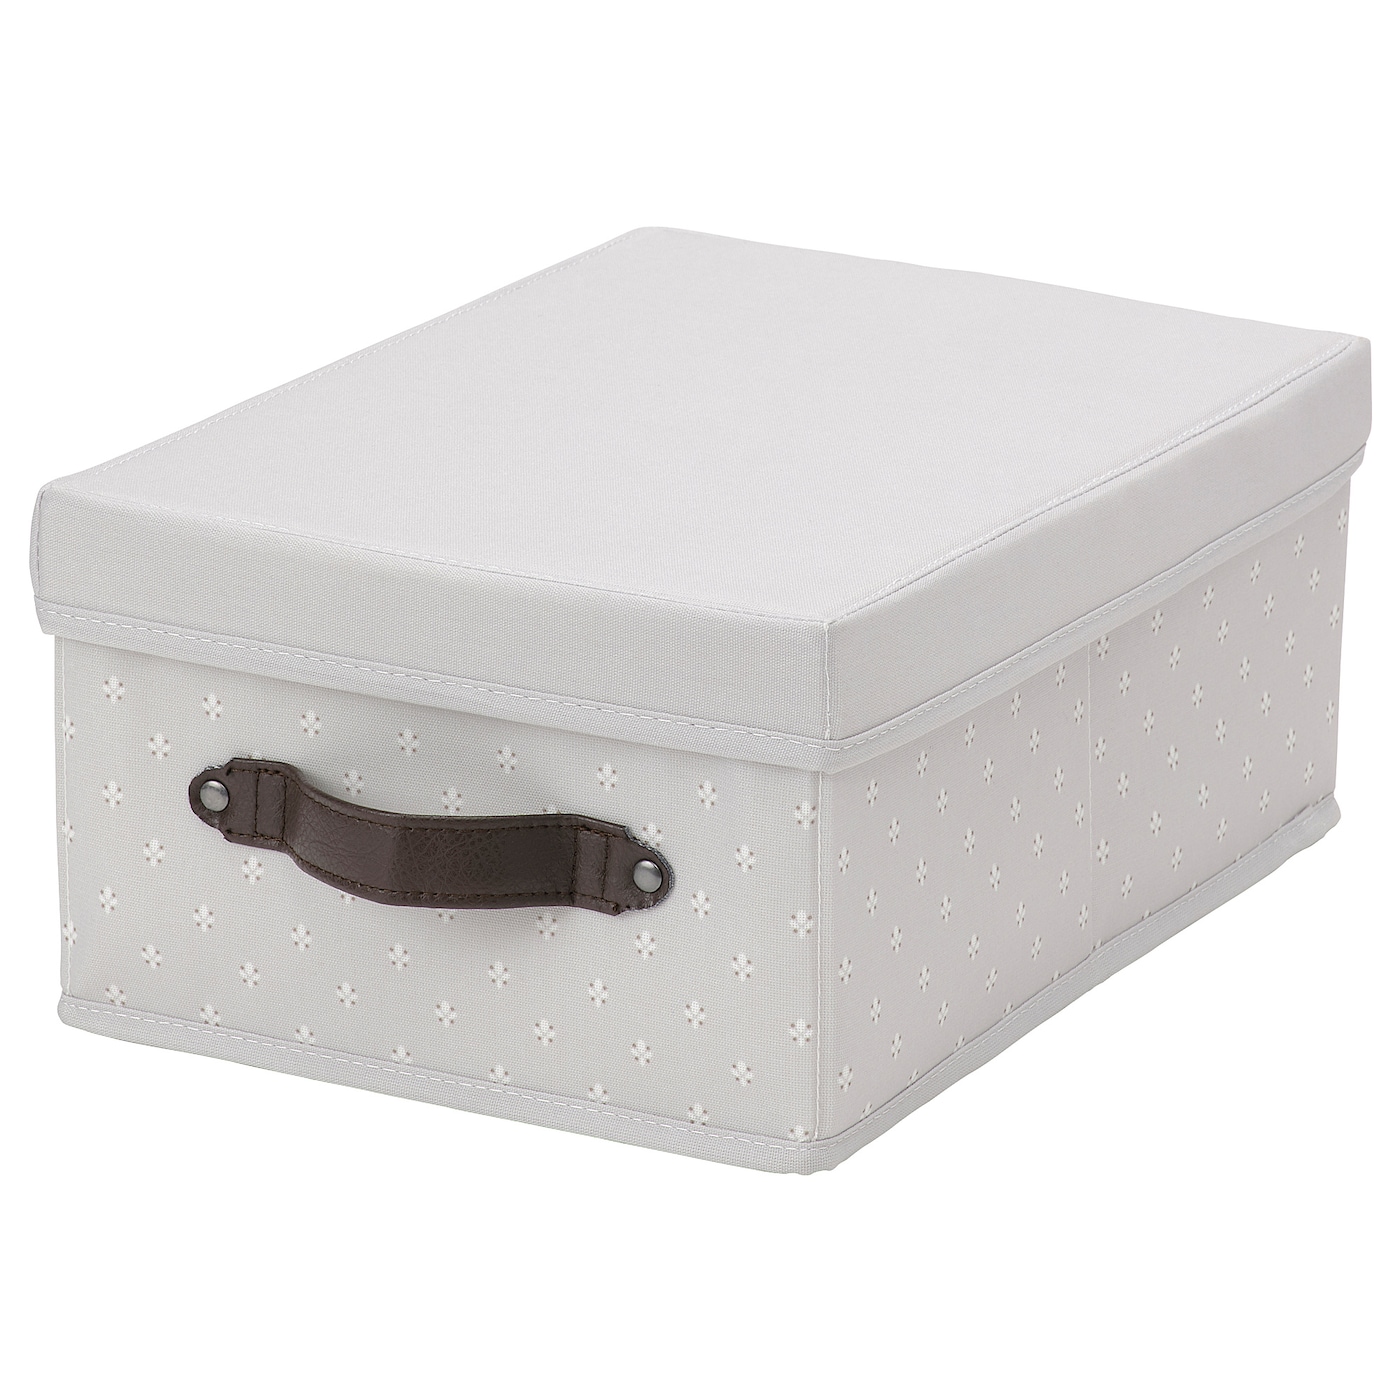 Коробка с крышкой - BLÄDDRARE / BLАDDRARE IKEA/БЛЭДДРАРЕ ИКЕА, 25х35х15 см,  белый